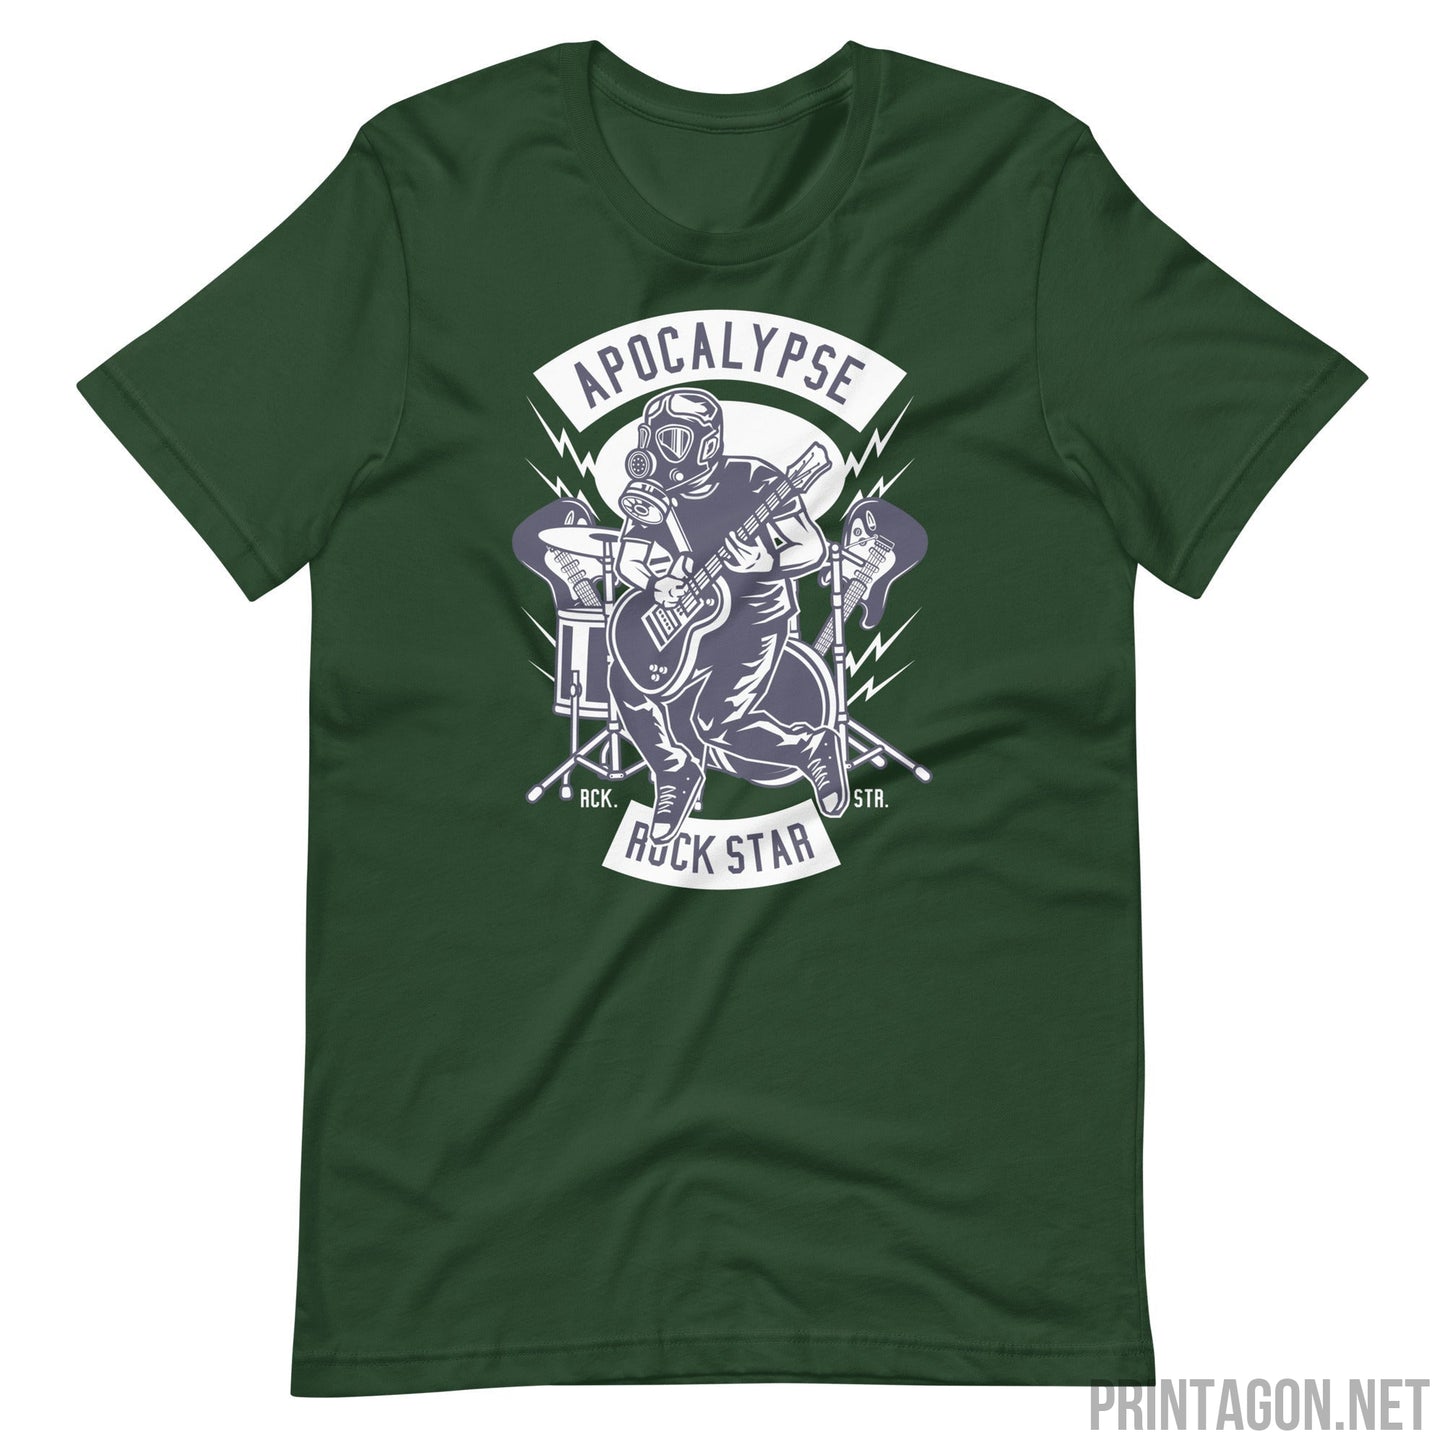 Printagon - Apocalypse Rock Star - T-shirt - Forest / S